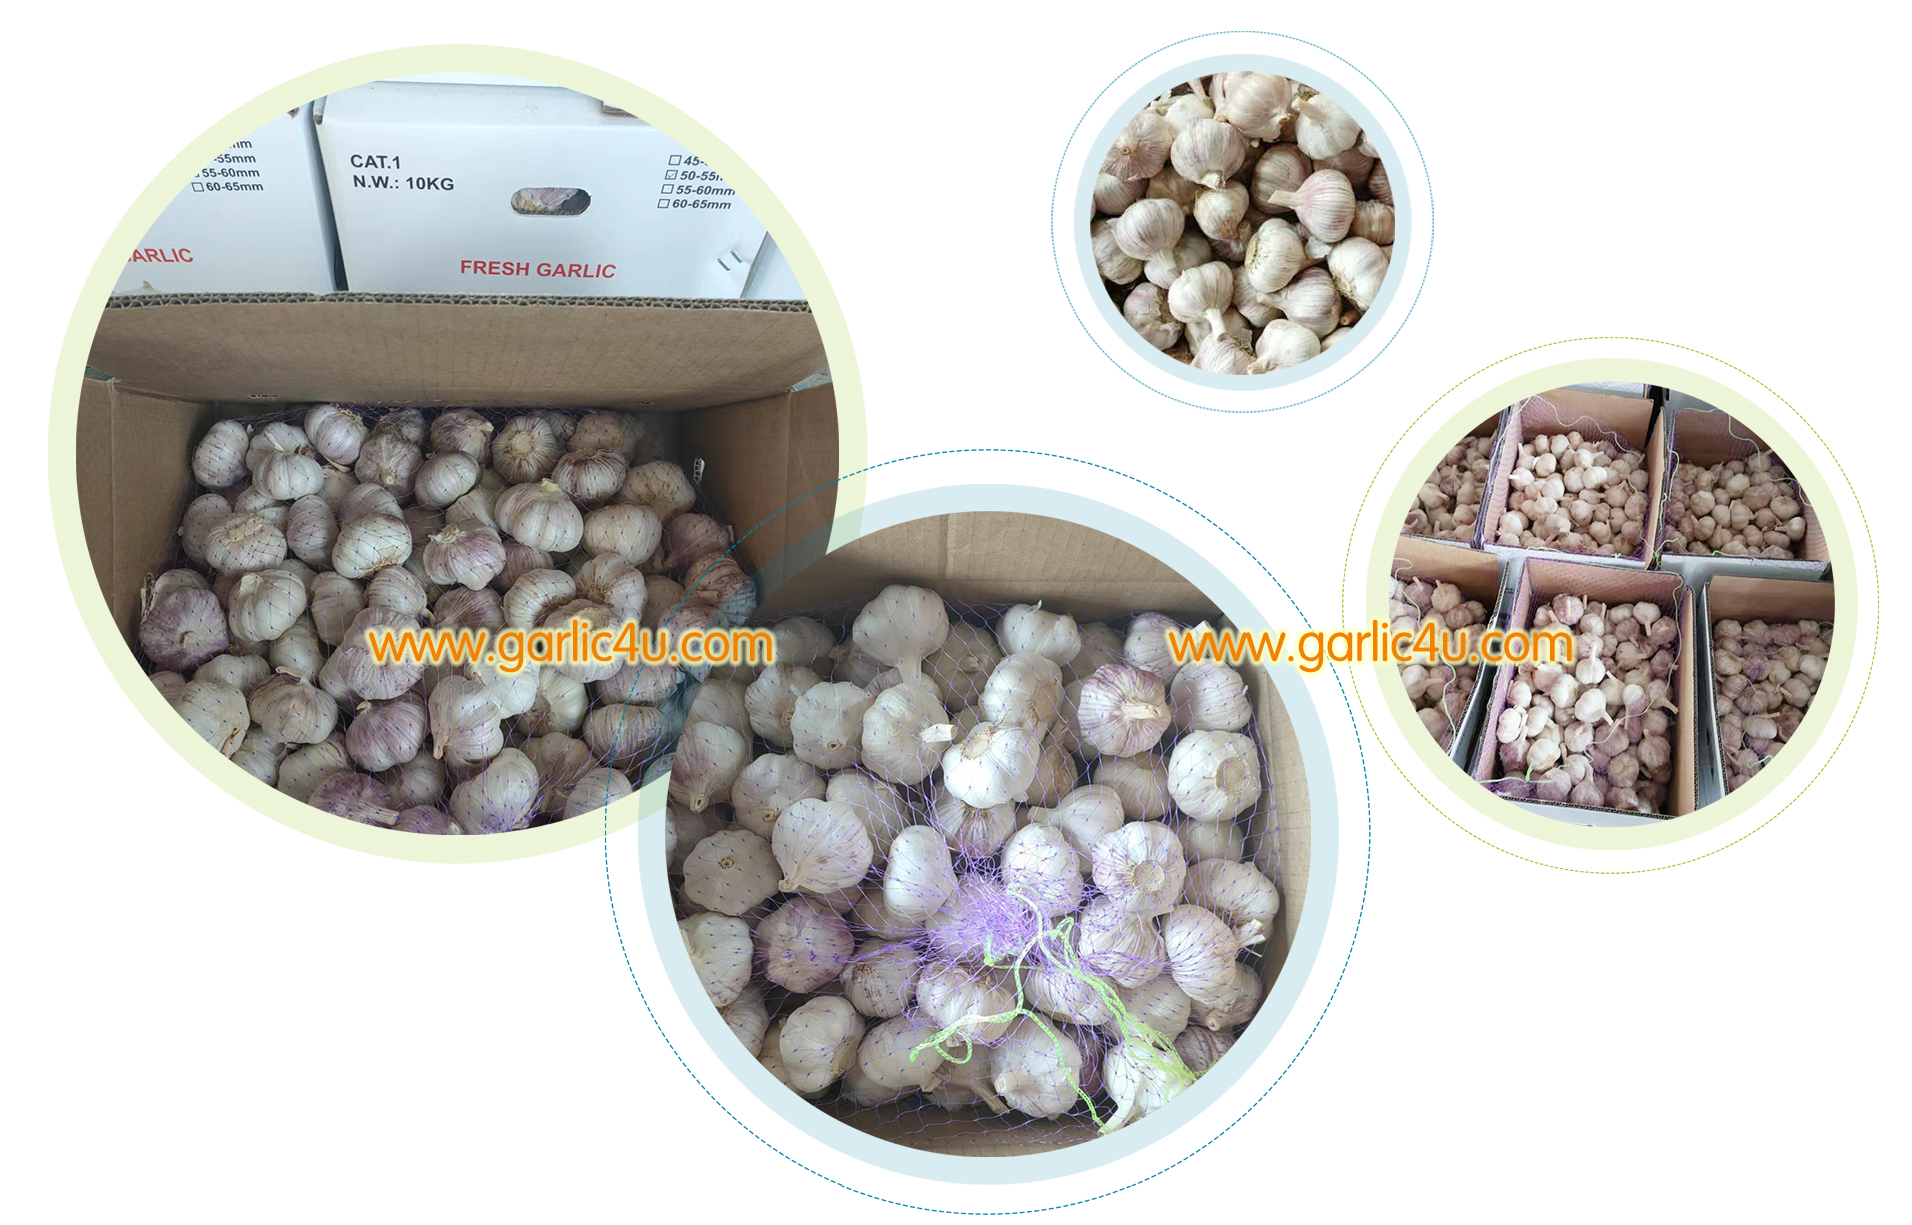 China garlic